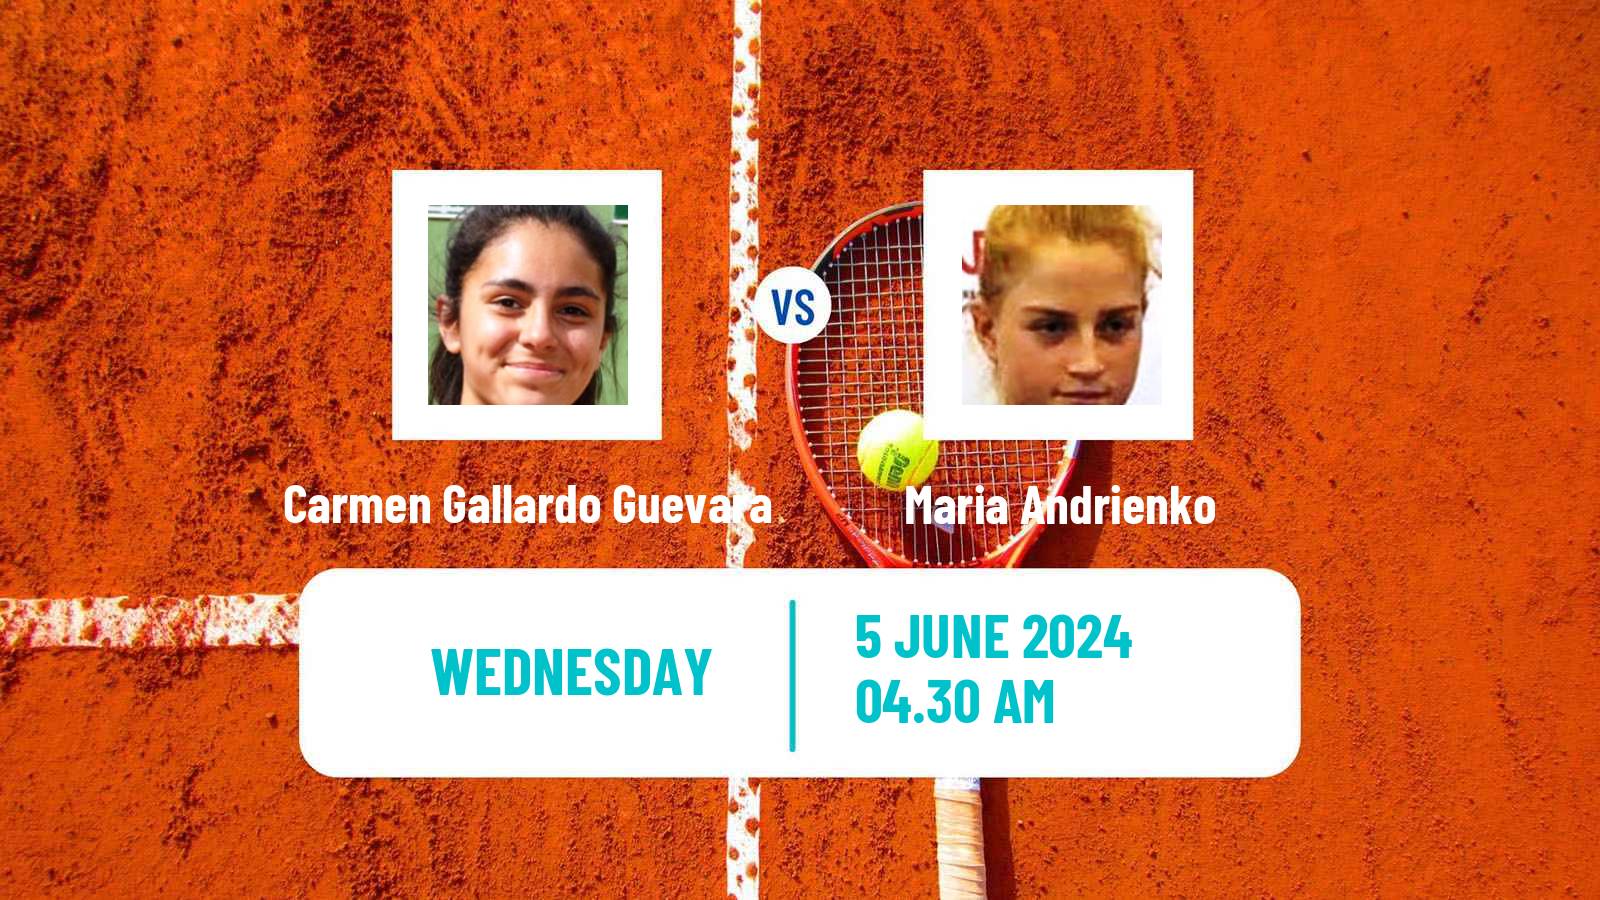 Tennis ITF W15 Madrid Women Carmen Gallardo Guevara - Maria Andrienko